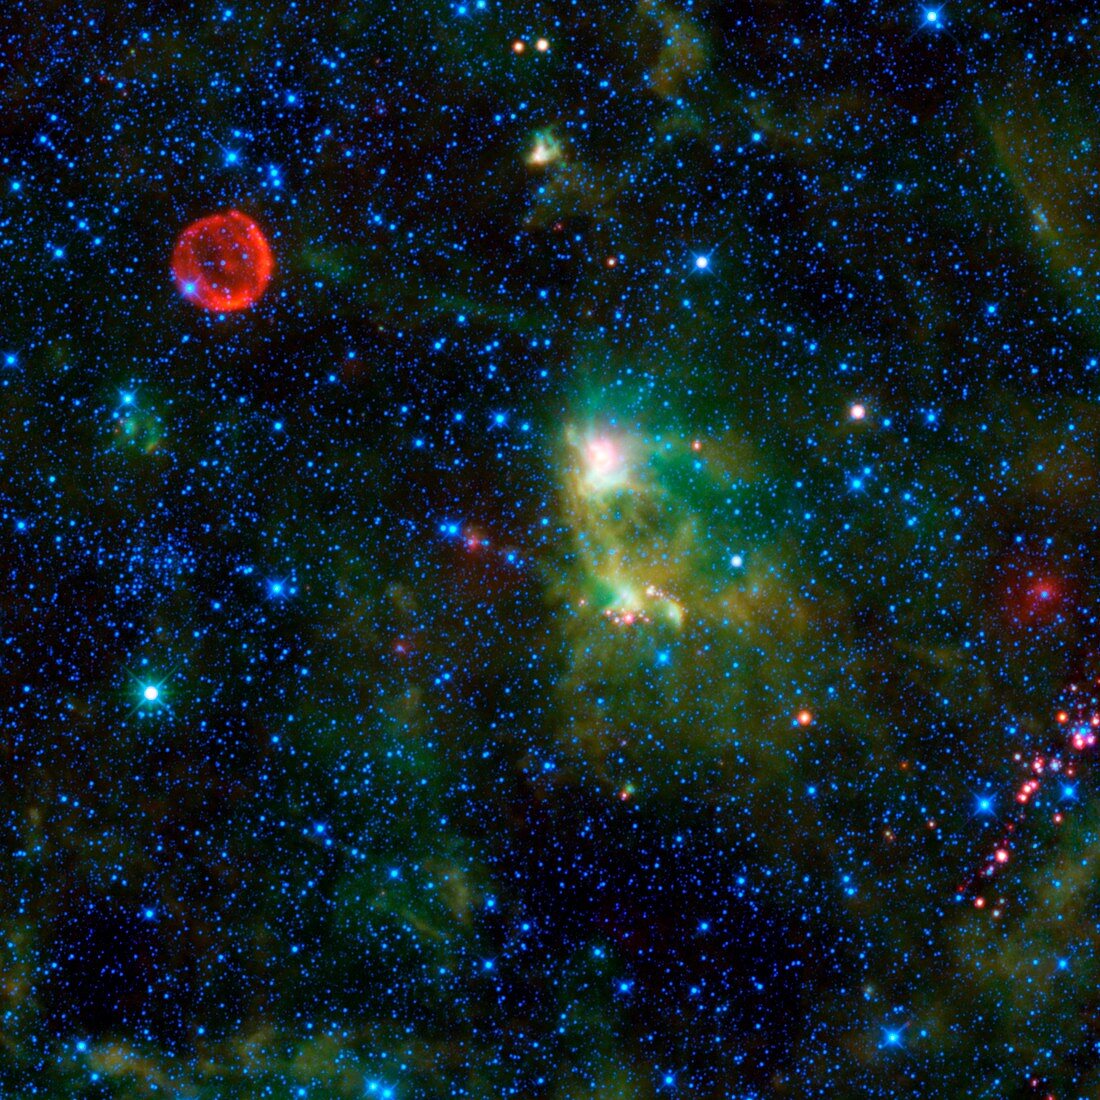 Supernova remnant and nebula,infrared